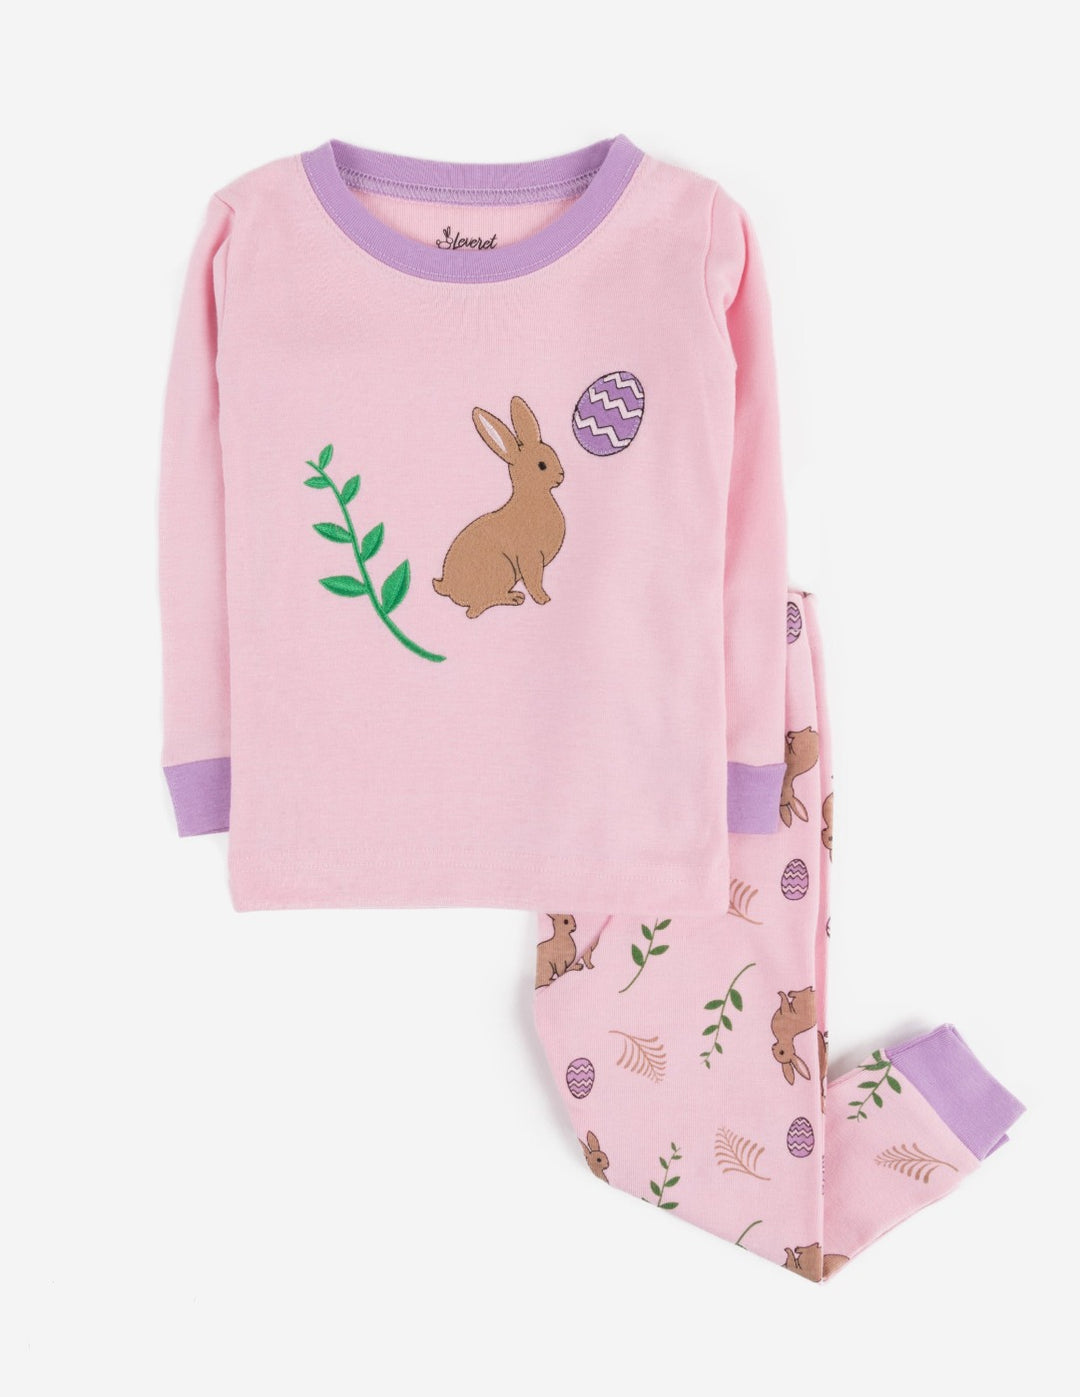 Shop Pj Bunny online